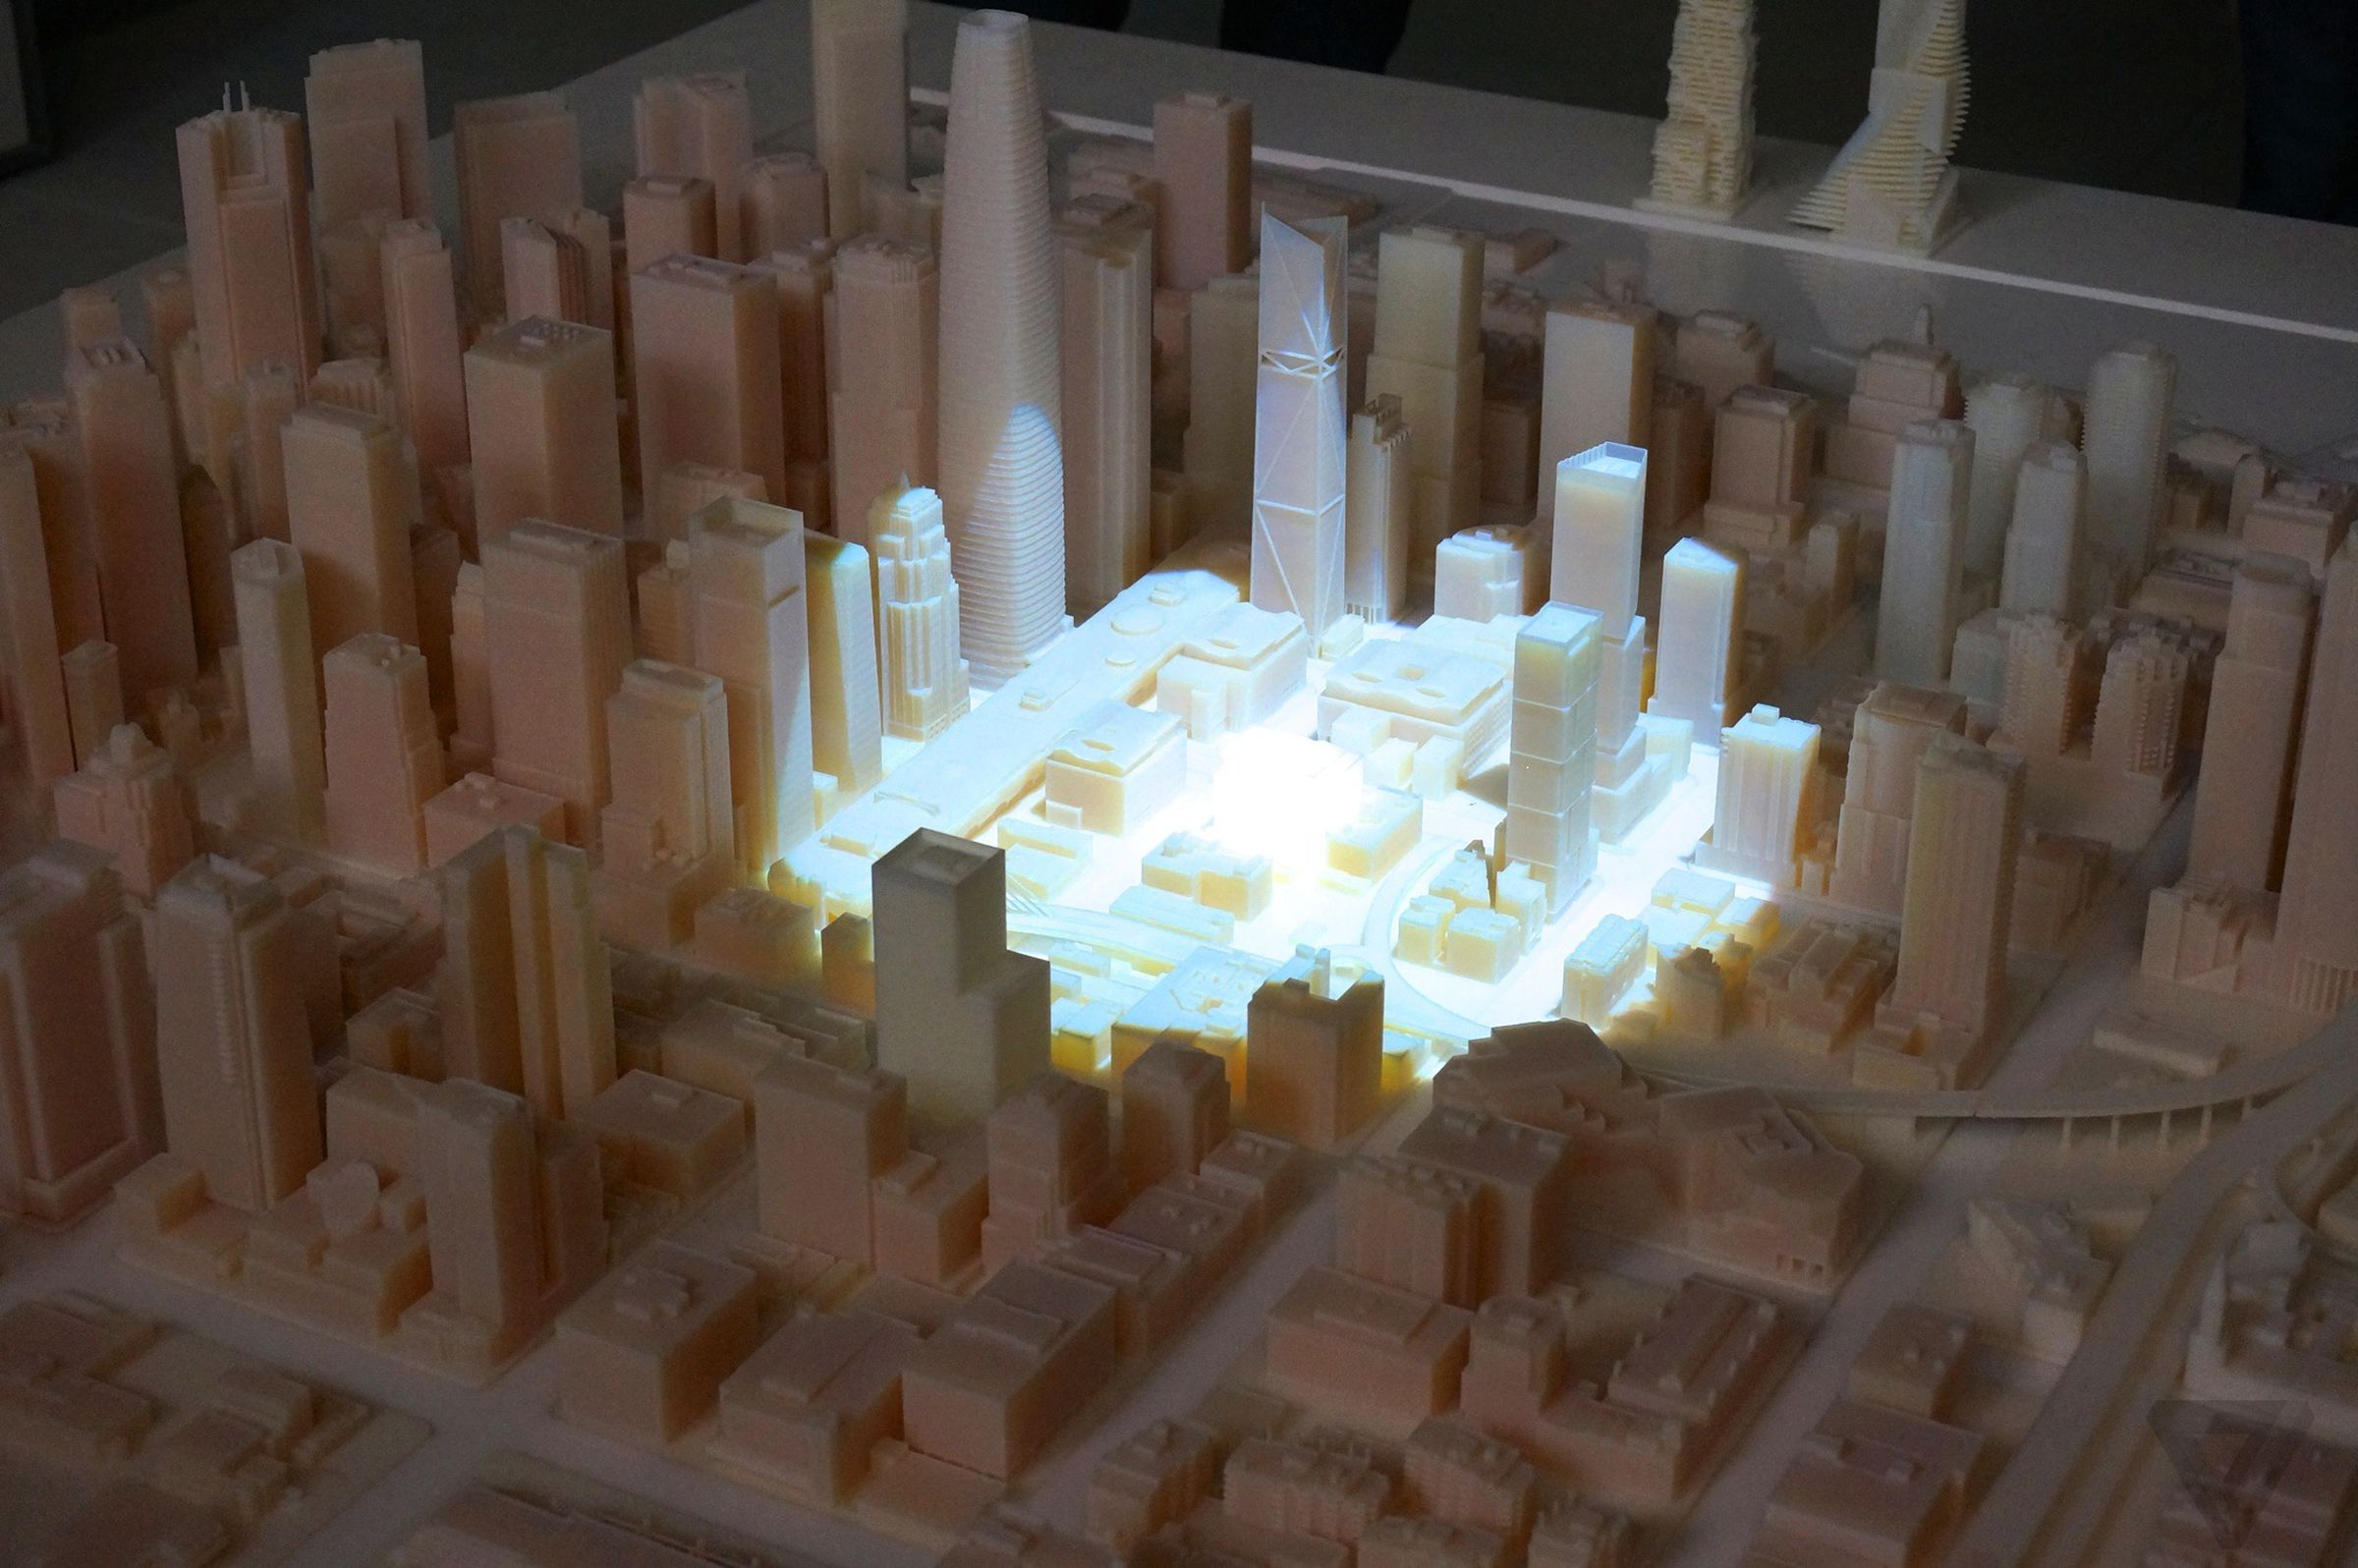 Autodesk's huge 3D printed map of San Francisco